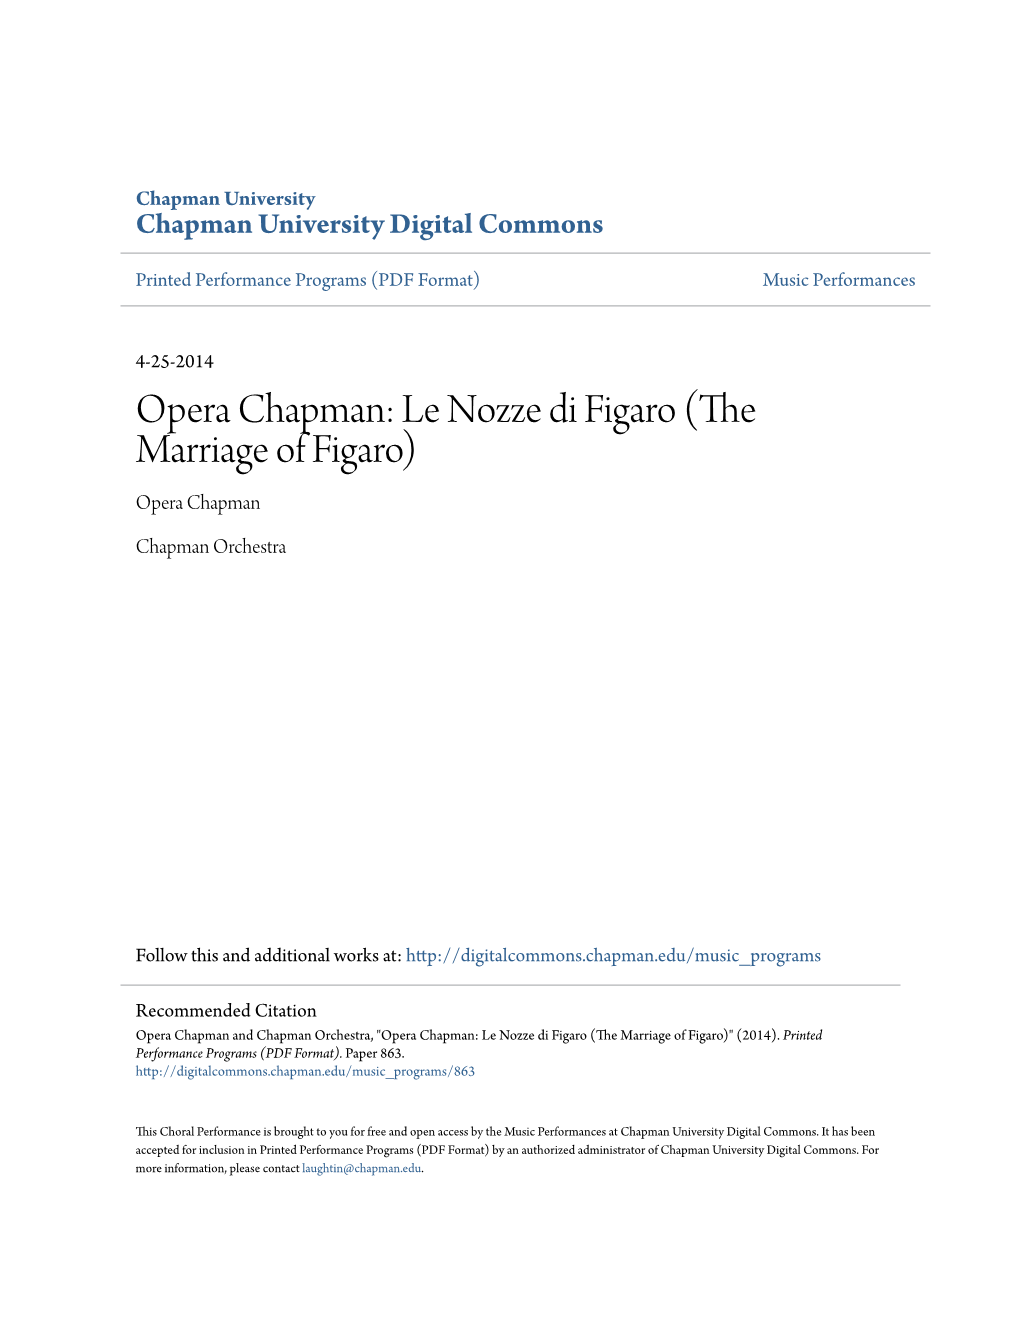 Le Nozze Di Figaro (The Marriage of Figaro) Opera Chapman